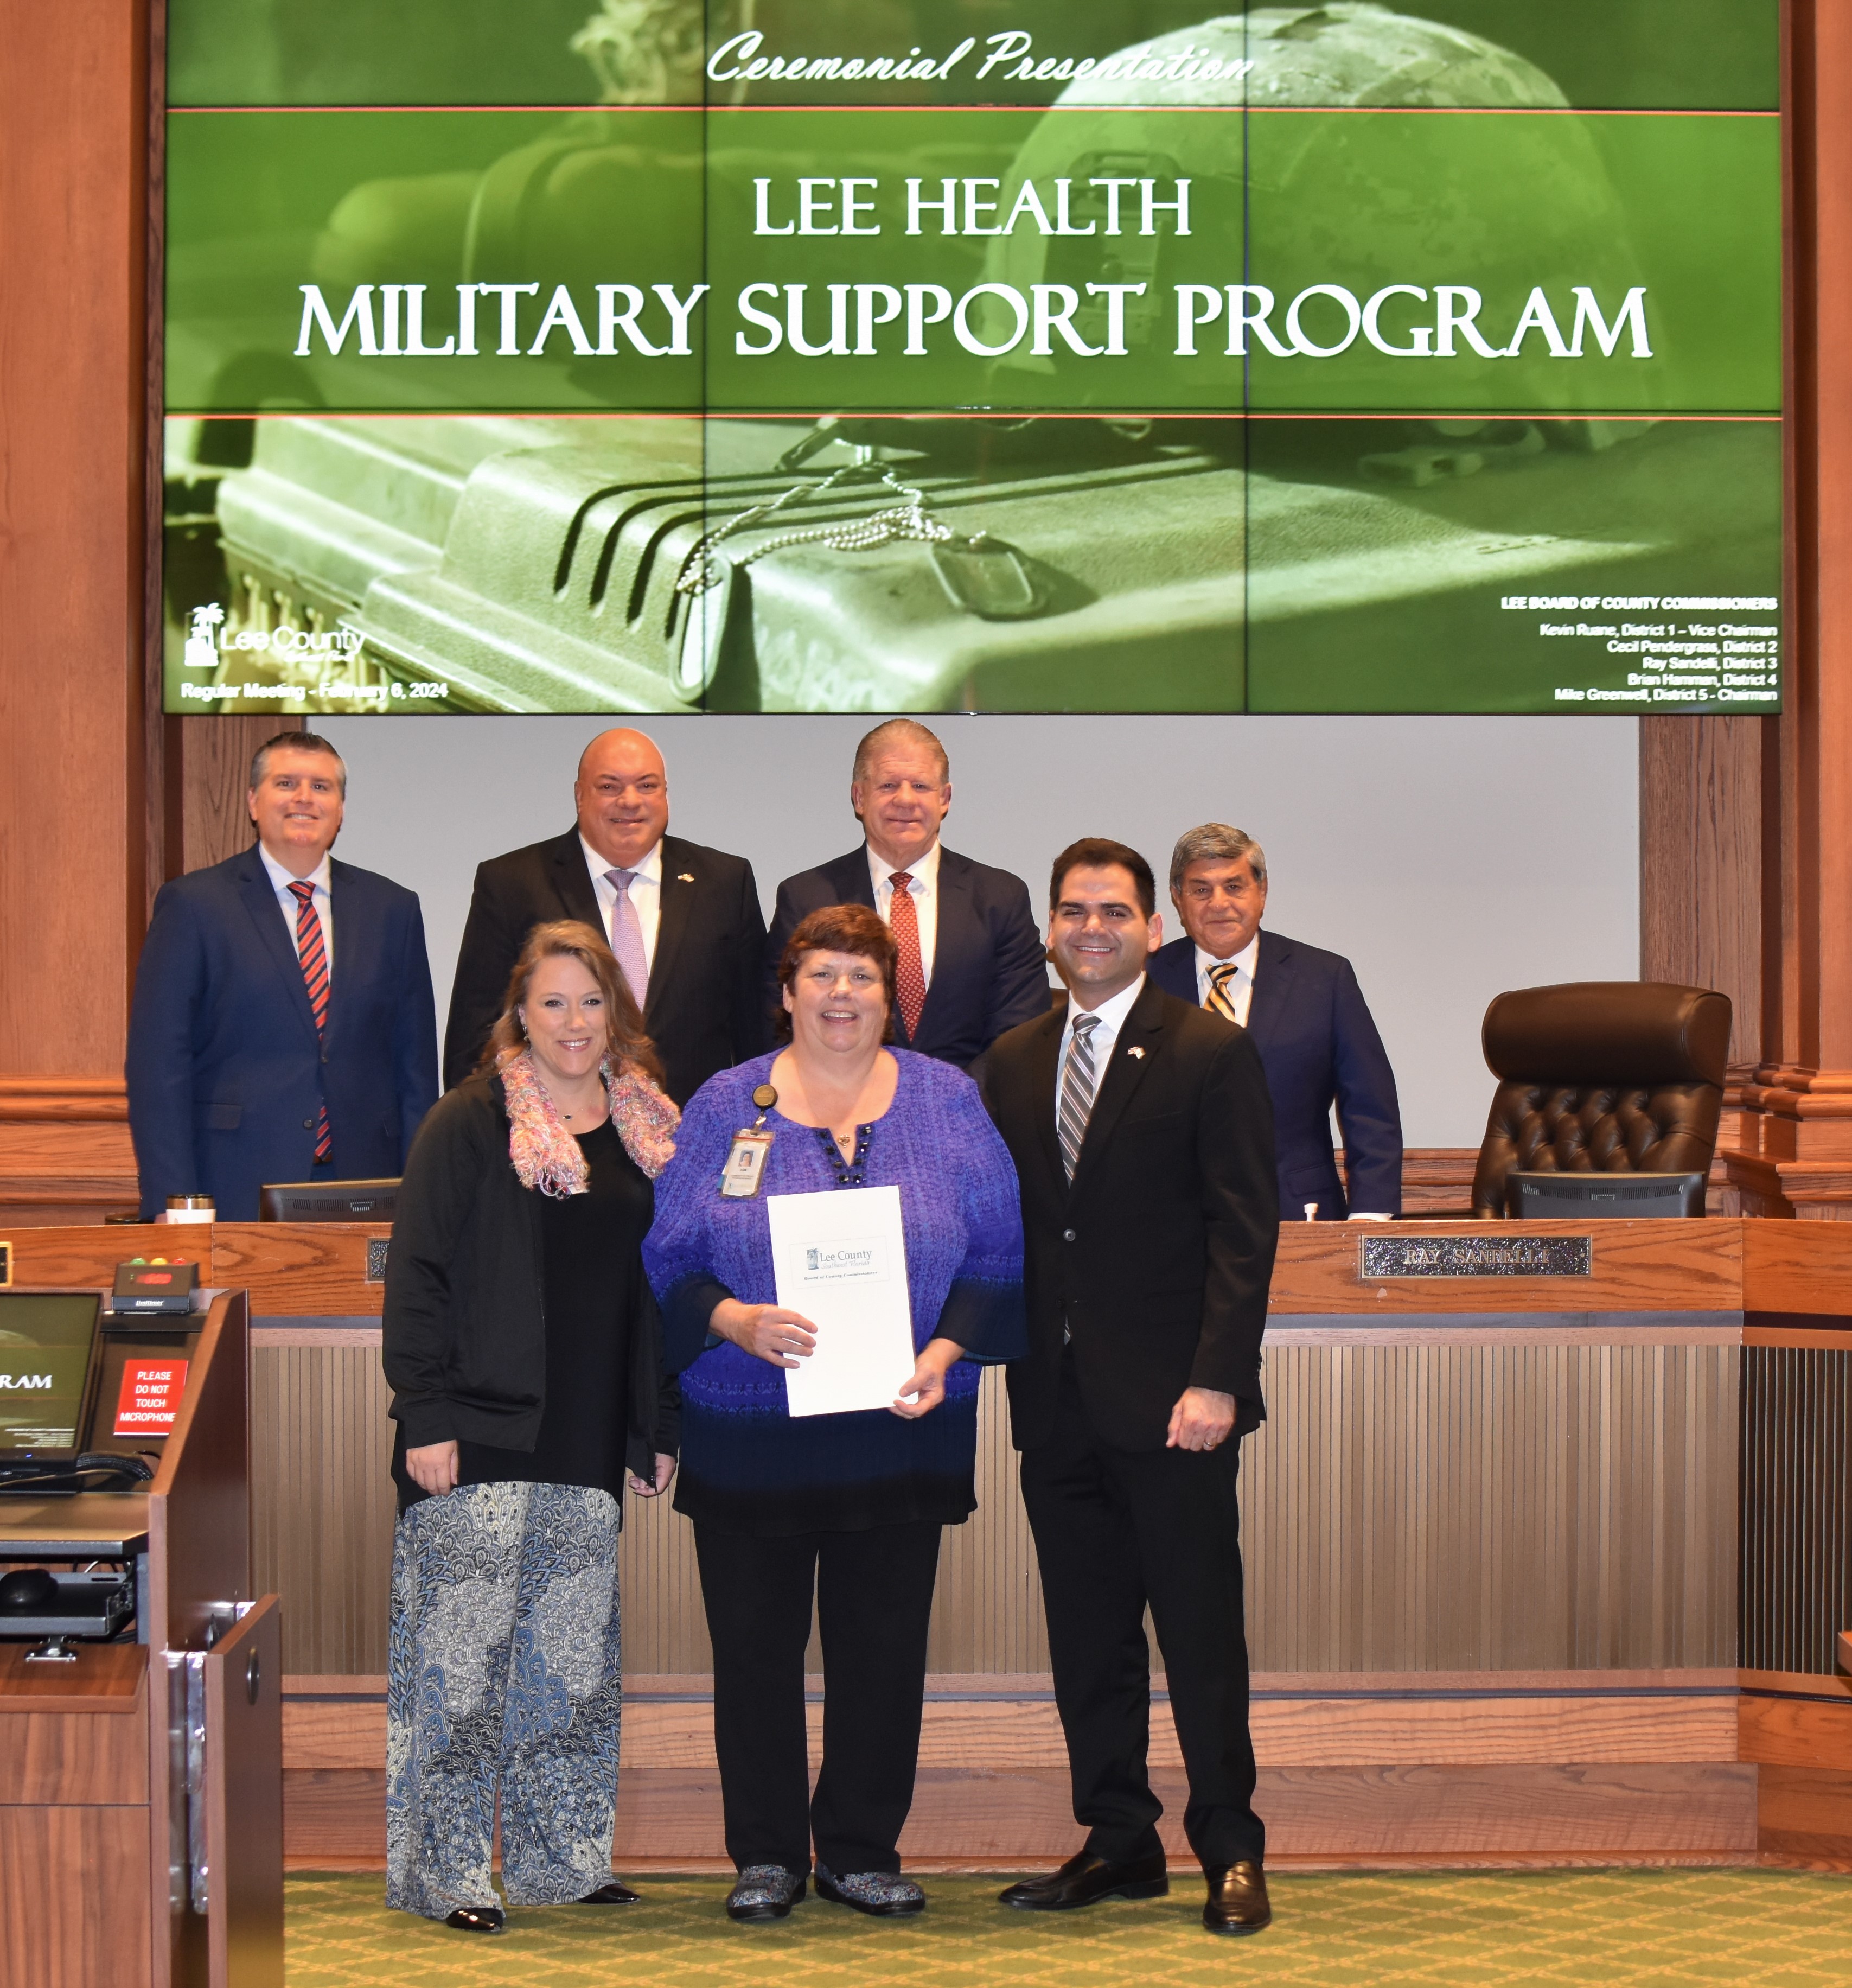 02-06-24 Lee Health Military Support Program - edit